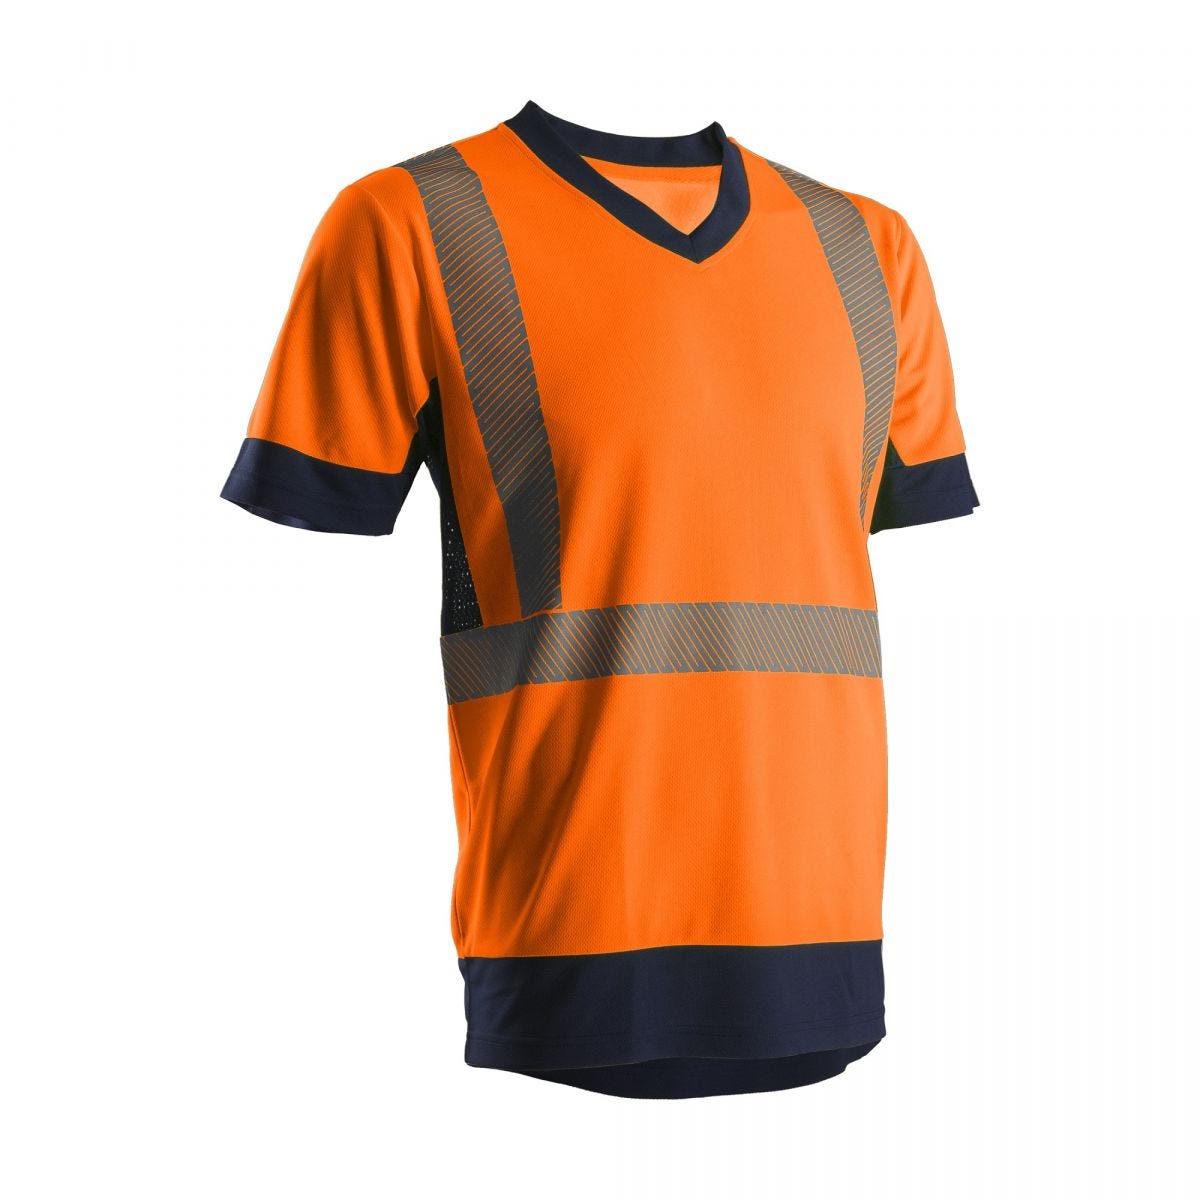 KYRIO T-shirt MC, orange HV/marine, 100% polyester, 140g/m² - COVERGUARD - Taille L 0